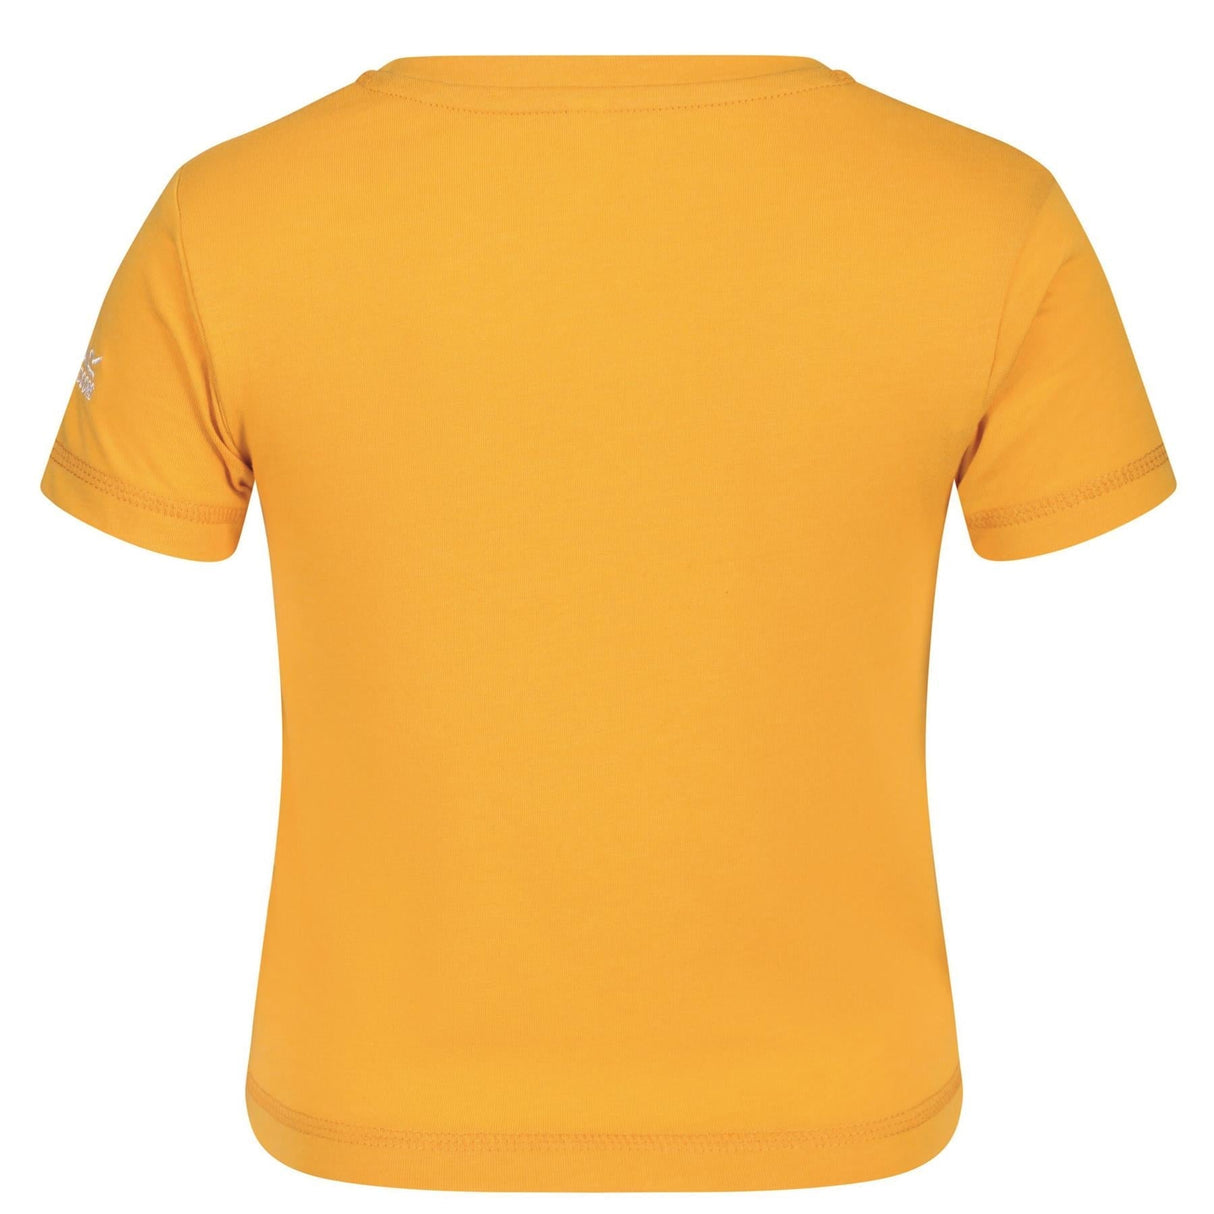 Regatta Peppa Pig T-Shirts - Premium clothing from Regatte - Just $7.99! Shop now at Warwickshire Clothing